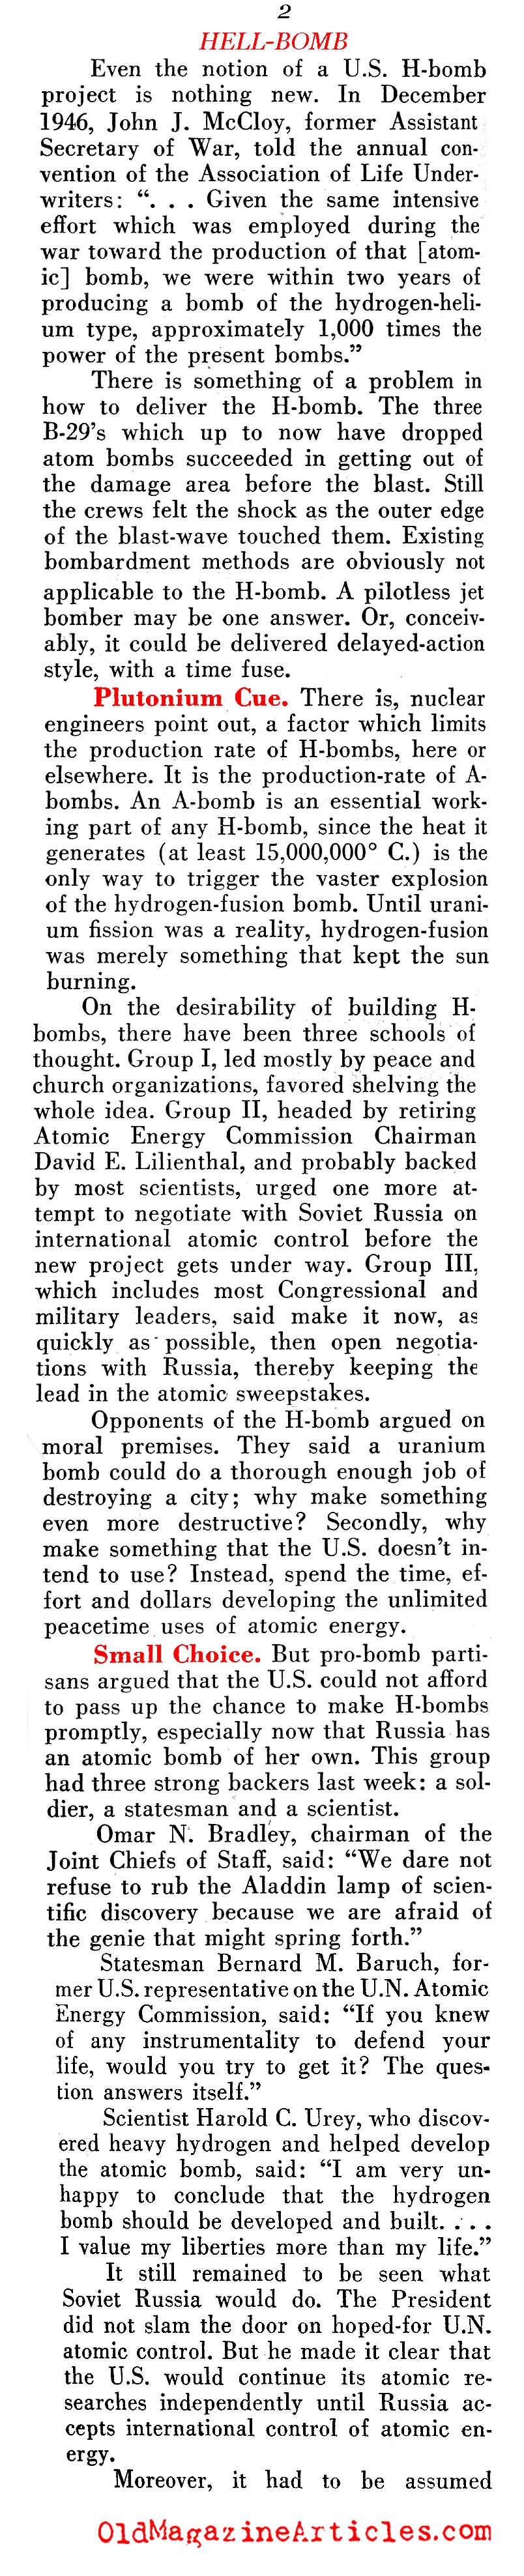 ''The Hell Bomb''  (Pathfinder Magazine, 1950)